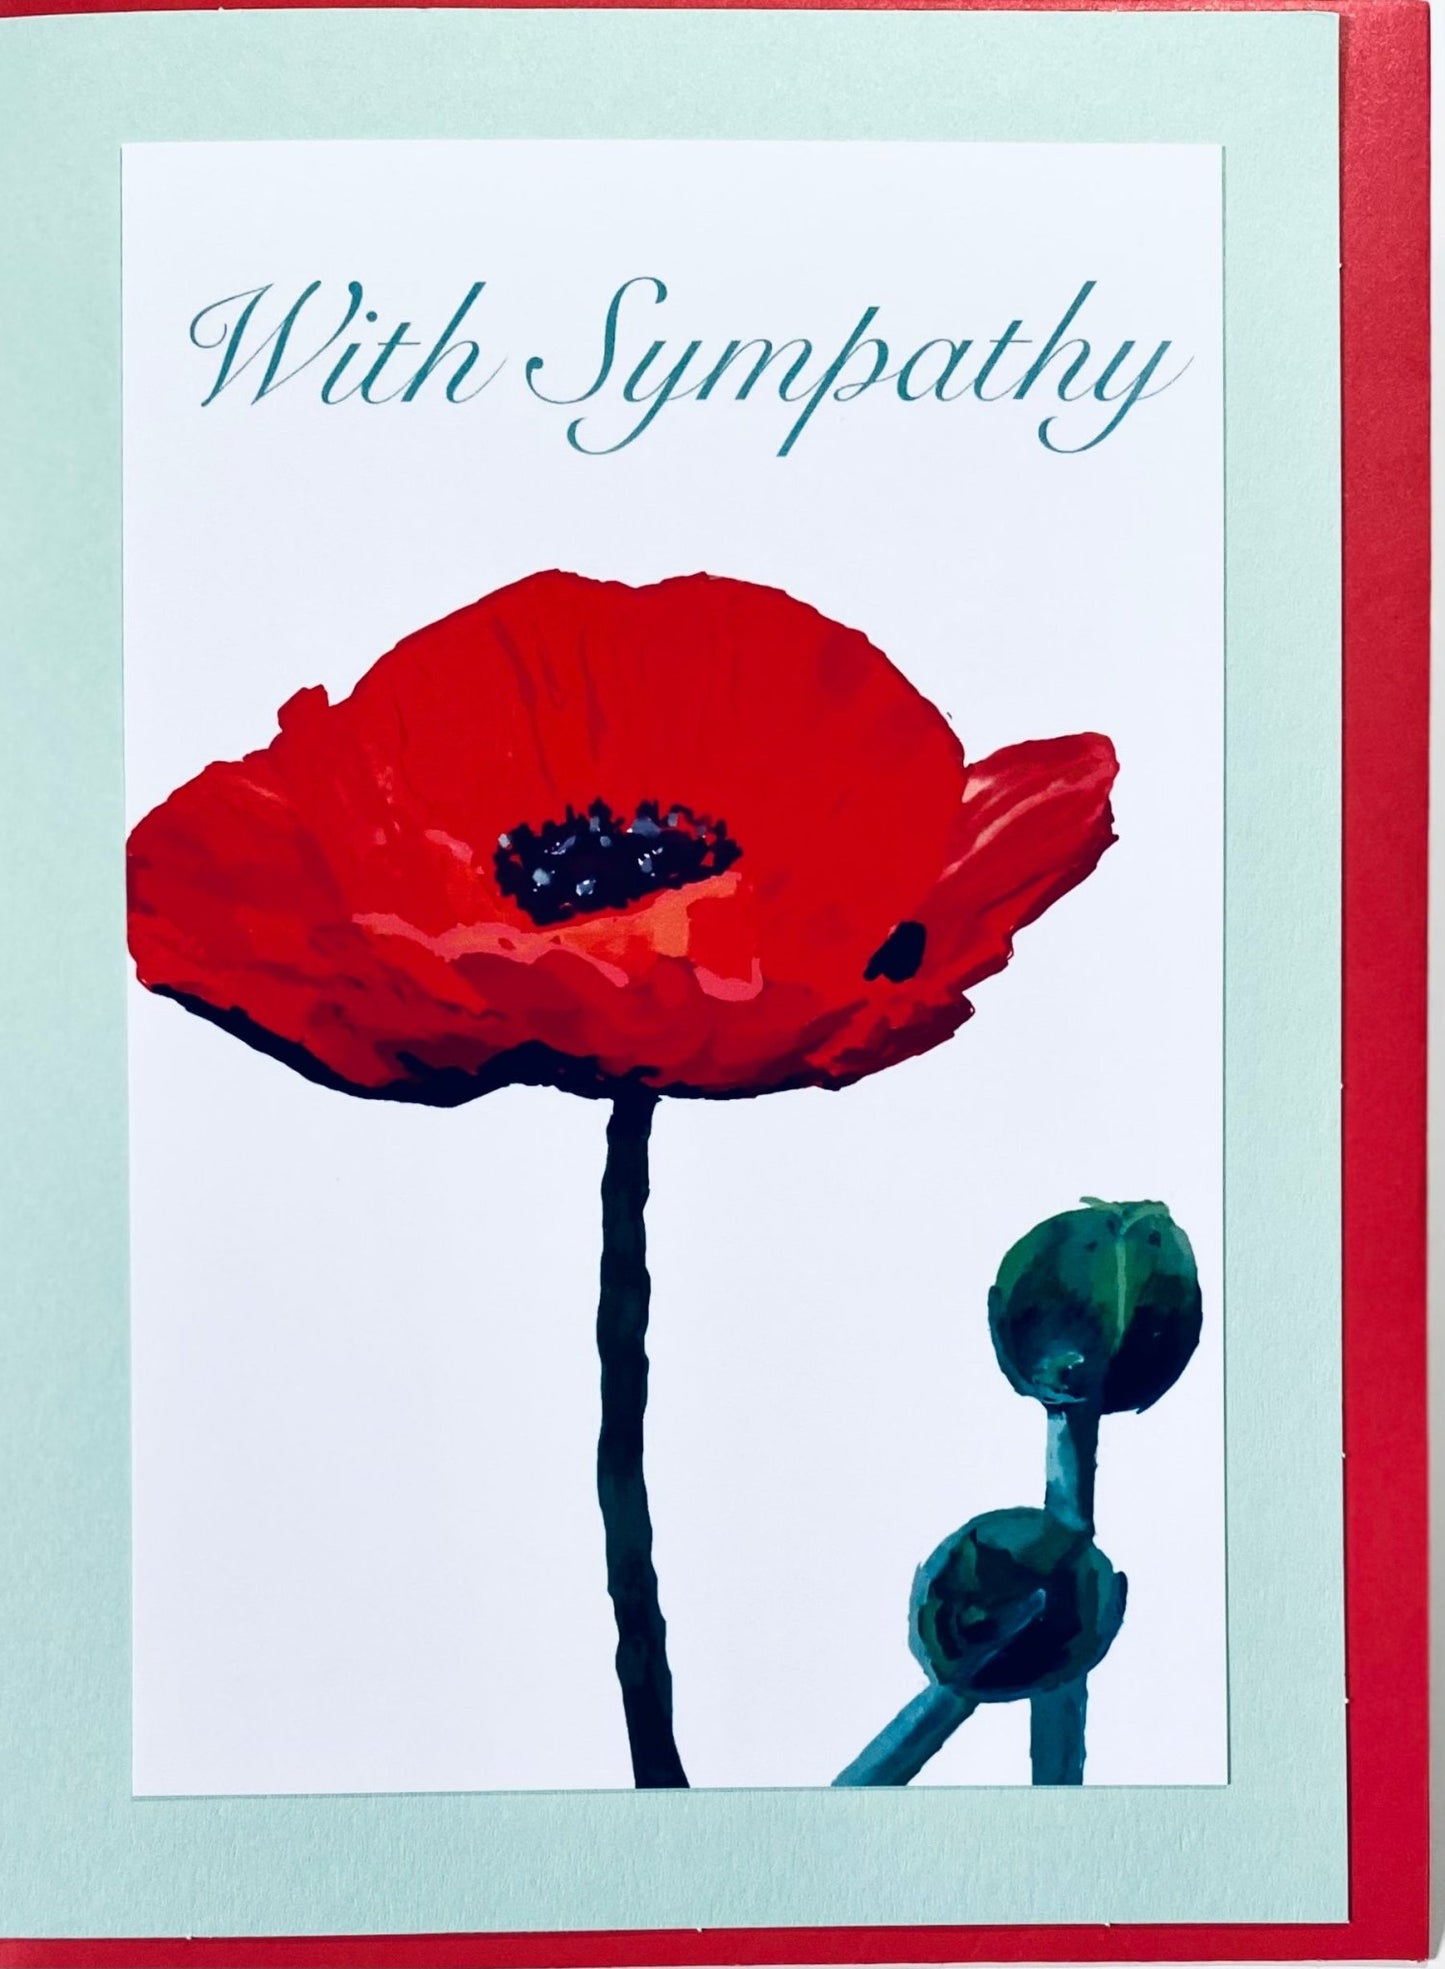 Watercolor Sympathy Greeting Card - Blue Cava